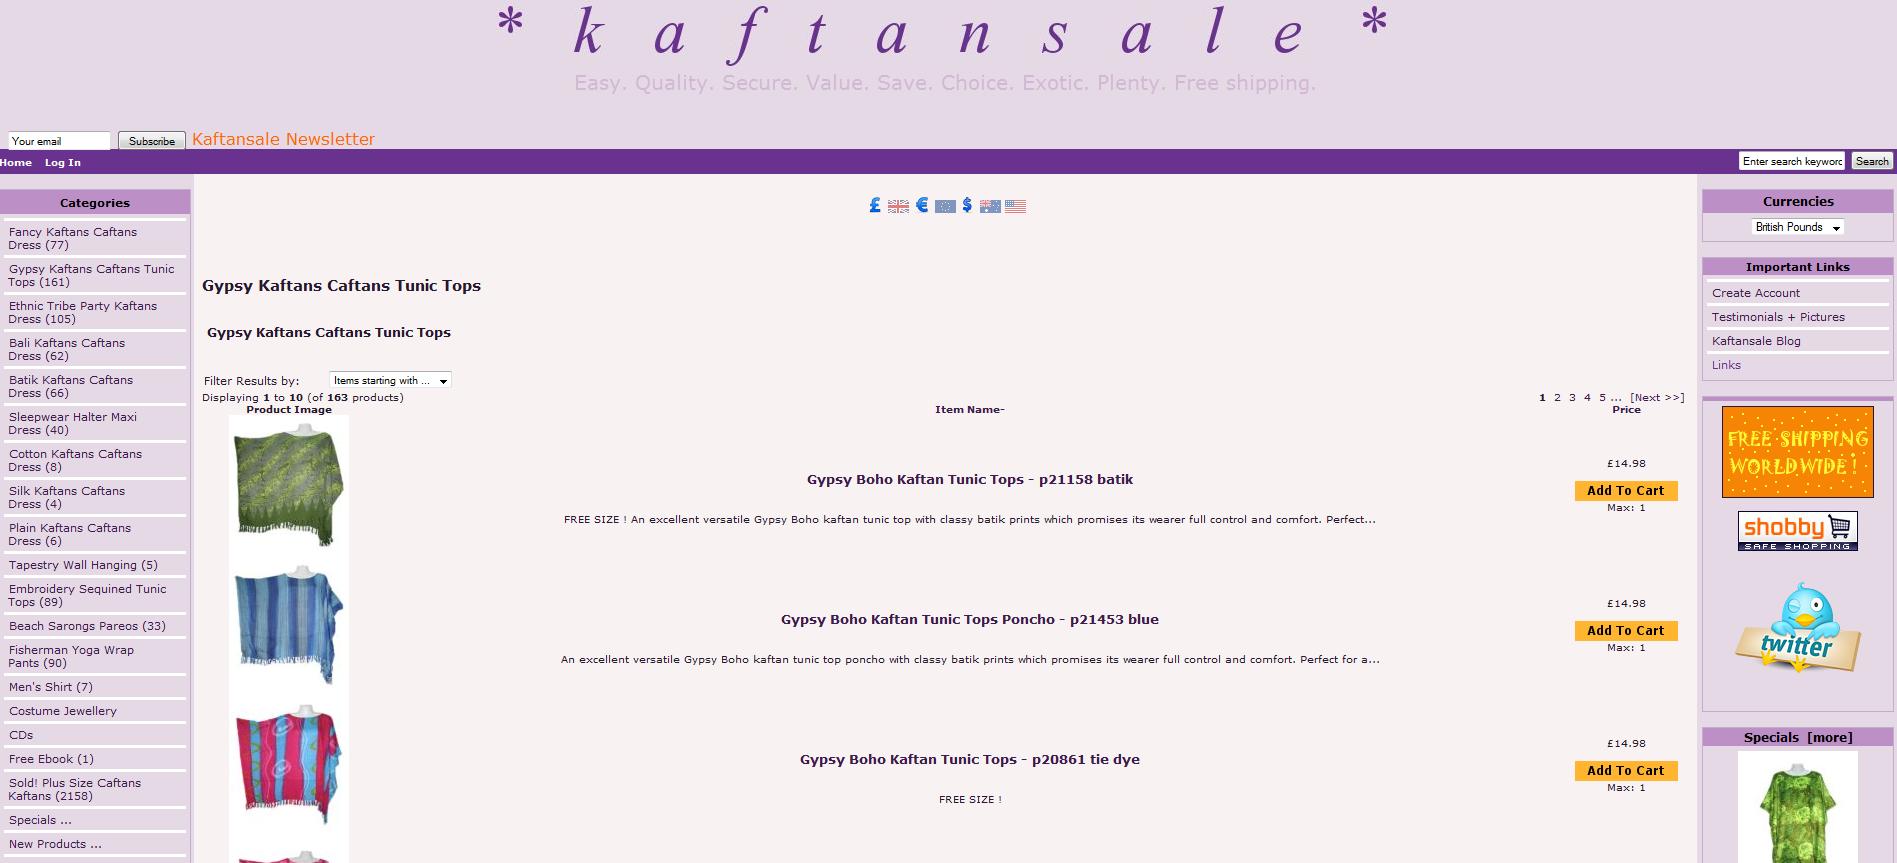 www.kaftansale.com